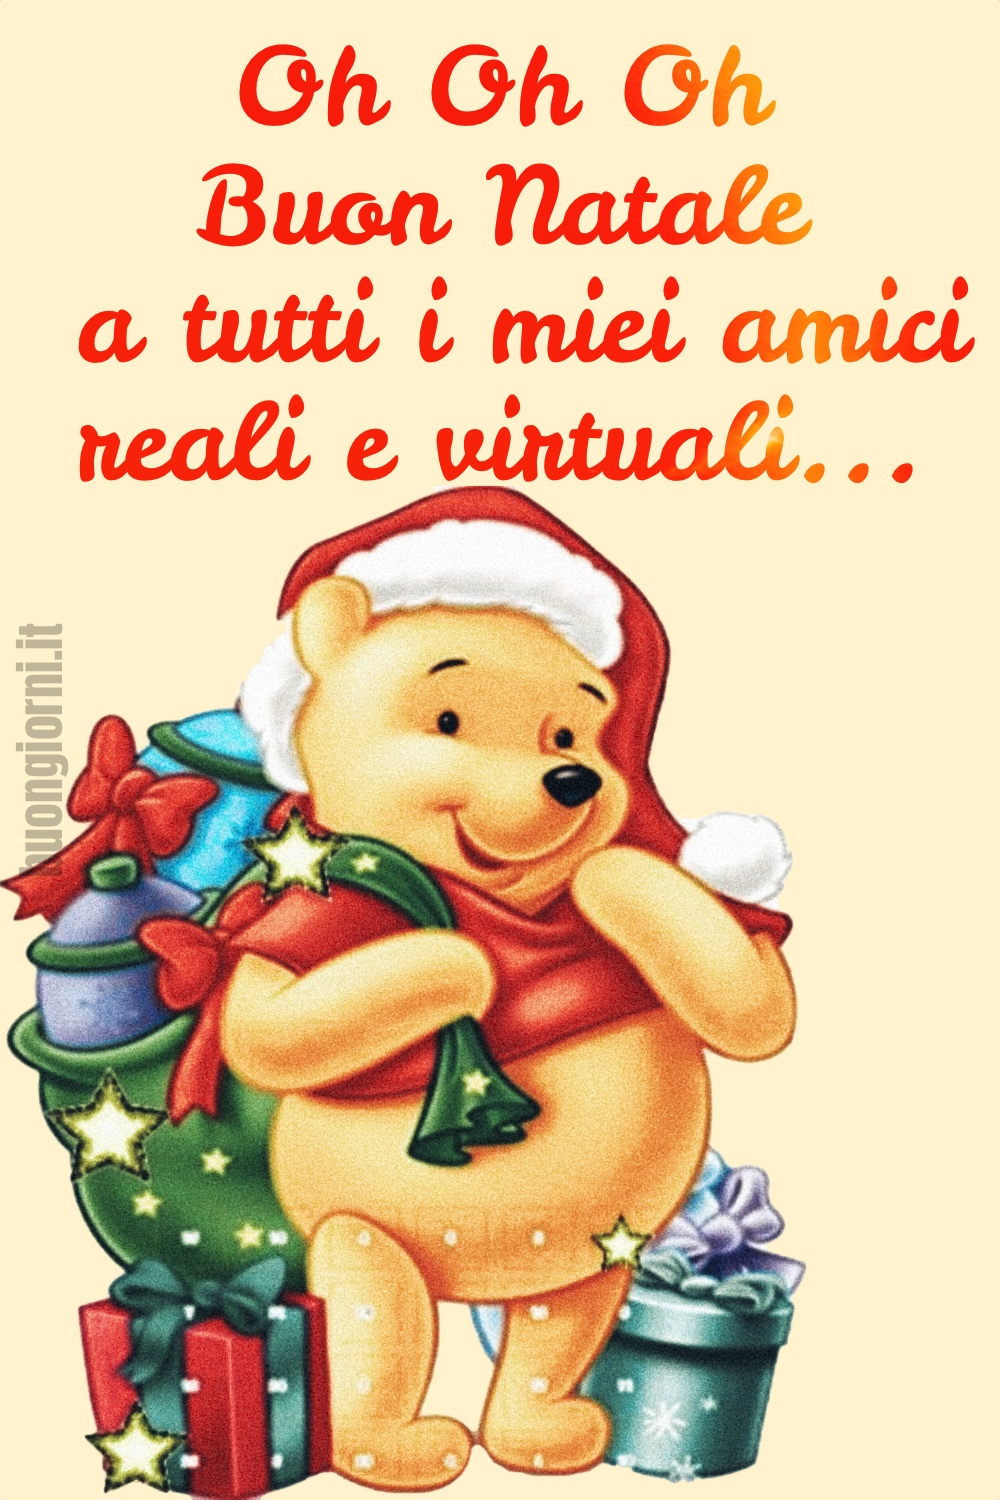 Oh Oh Oh Buon Natale a tutti da Winnie Pooh